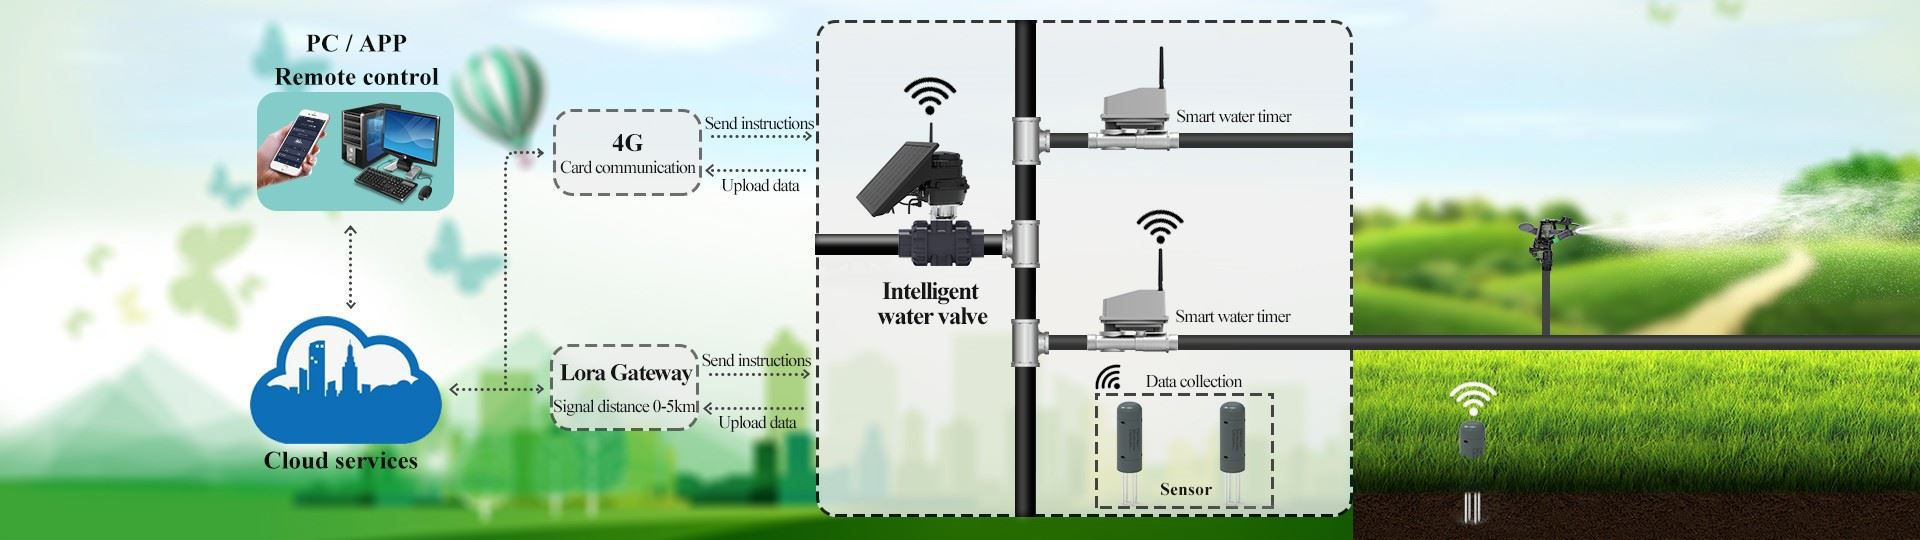 wireless irrigation controller3